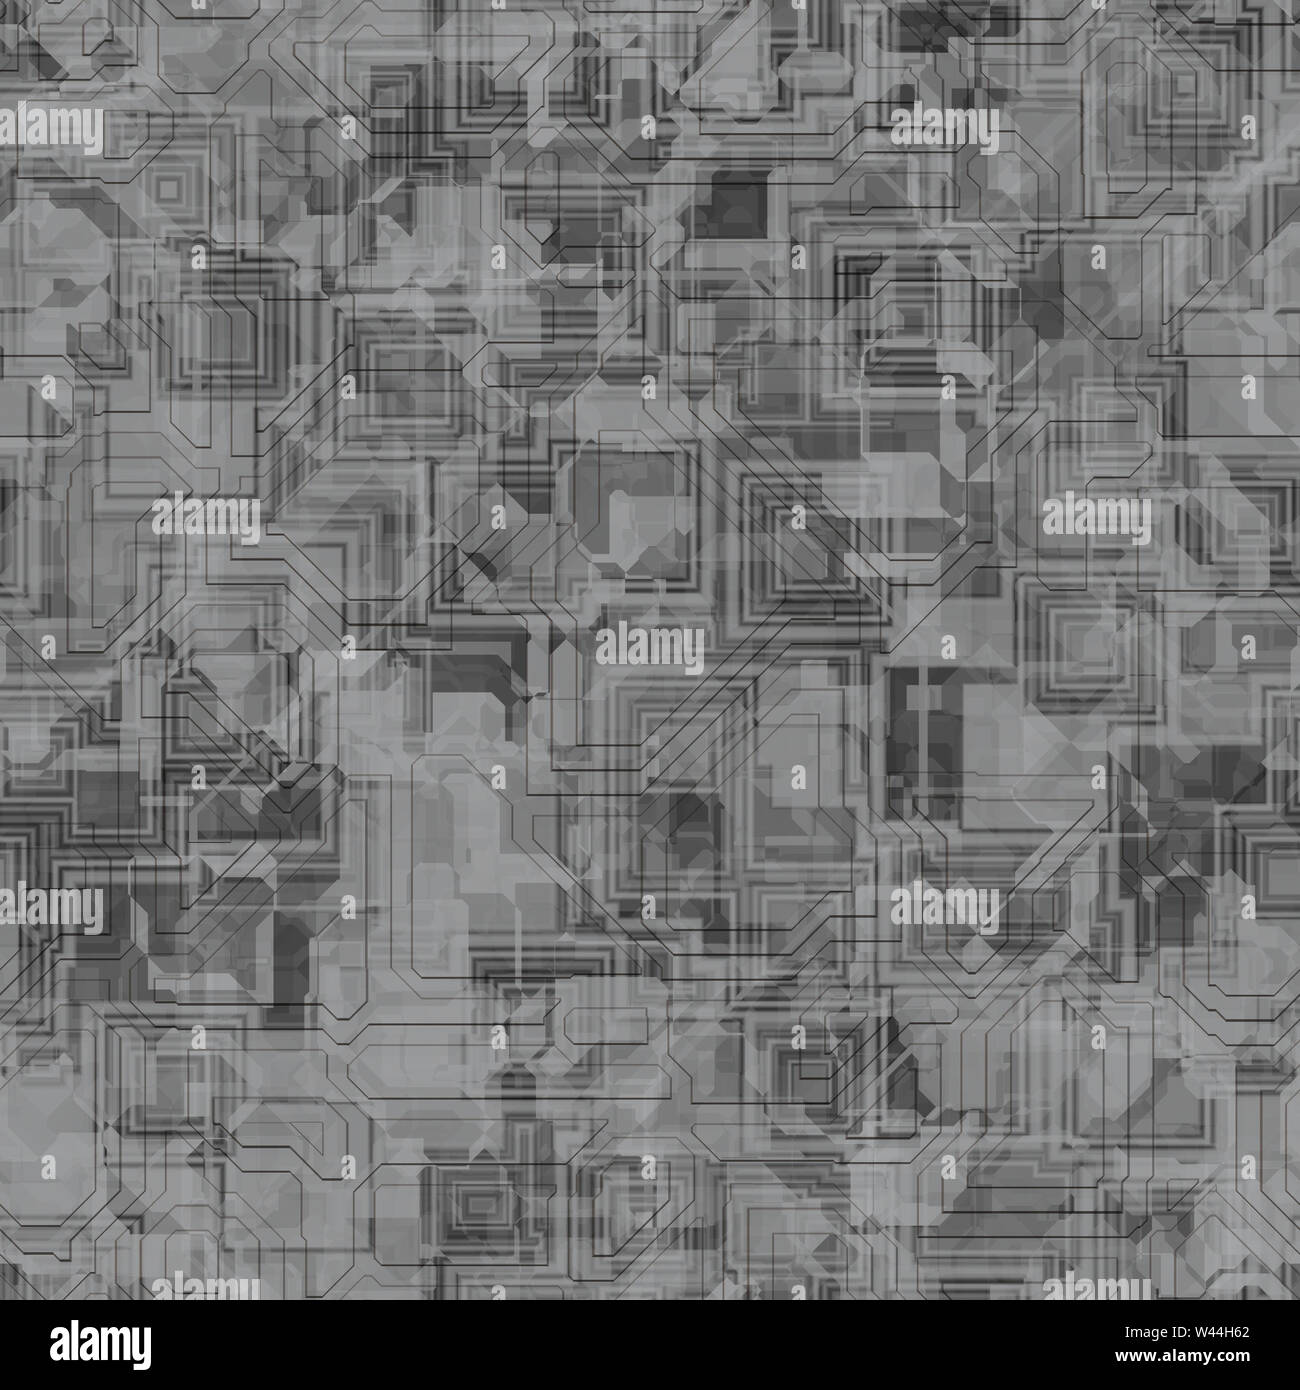 Spaceship hull texture or pattern. Seamless SciFi Panels. Futuristic illustration Stock Photo